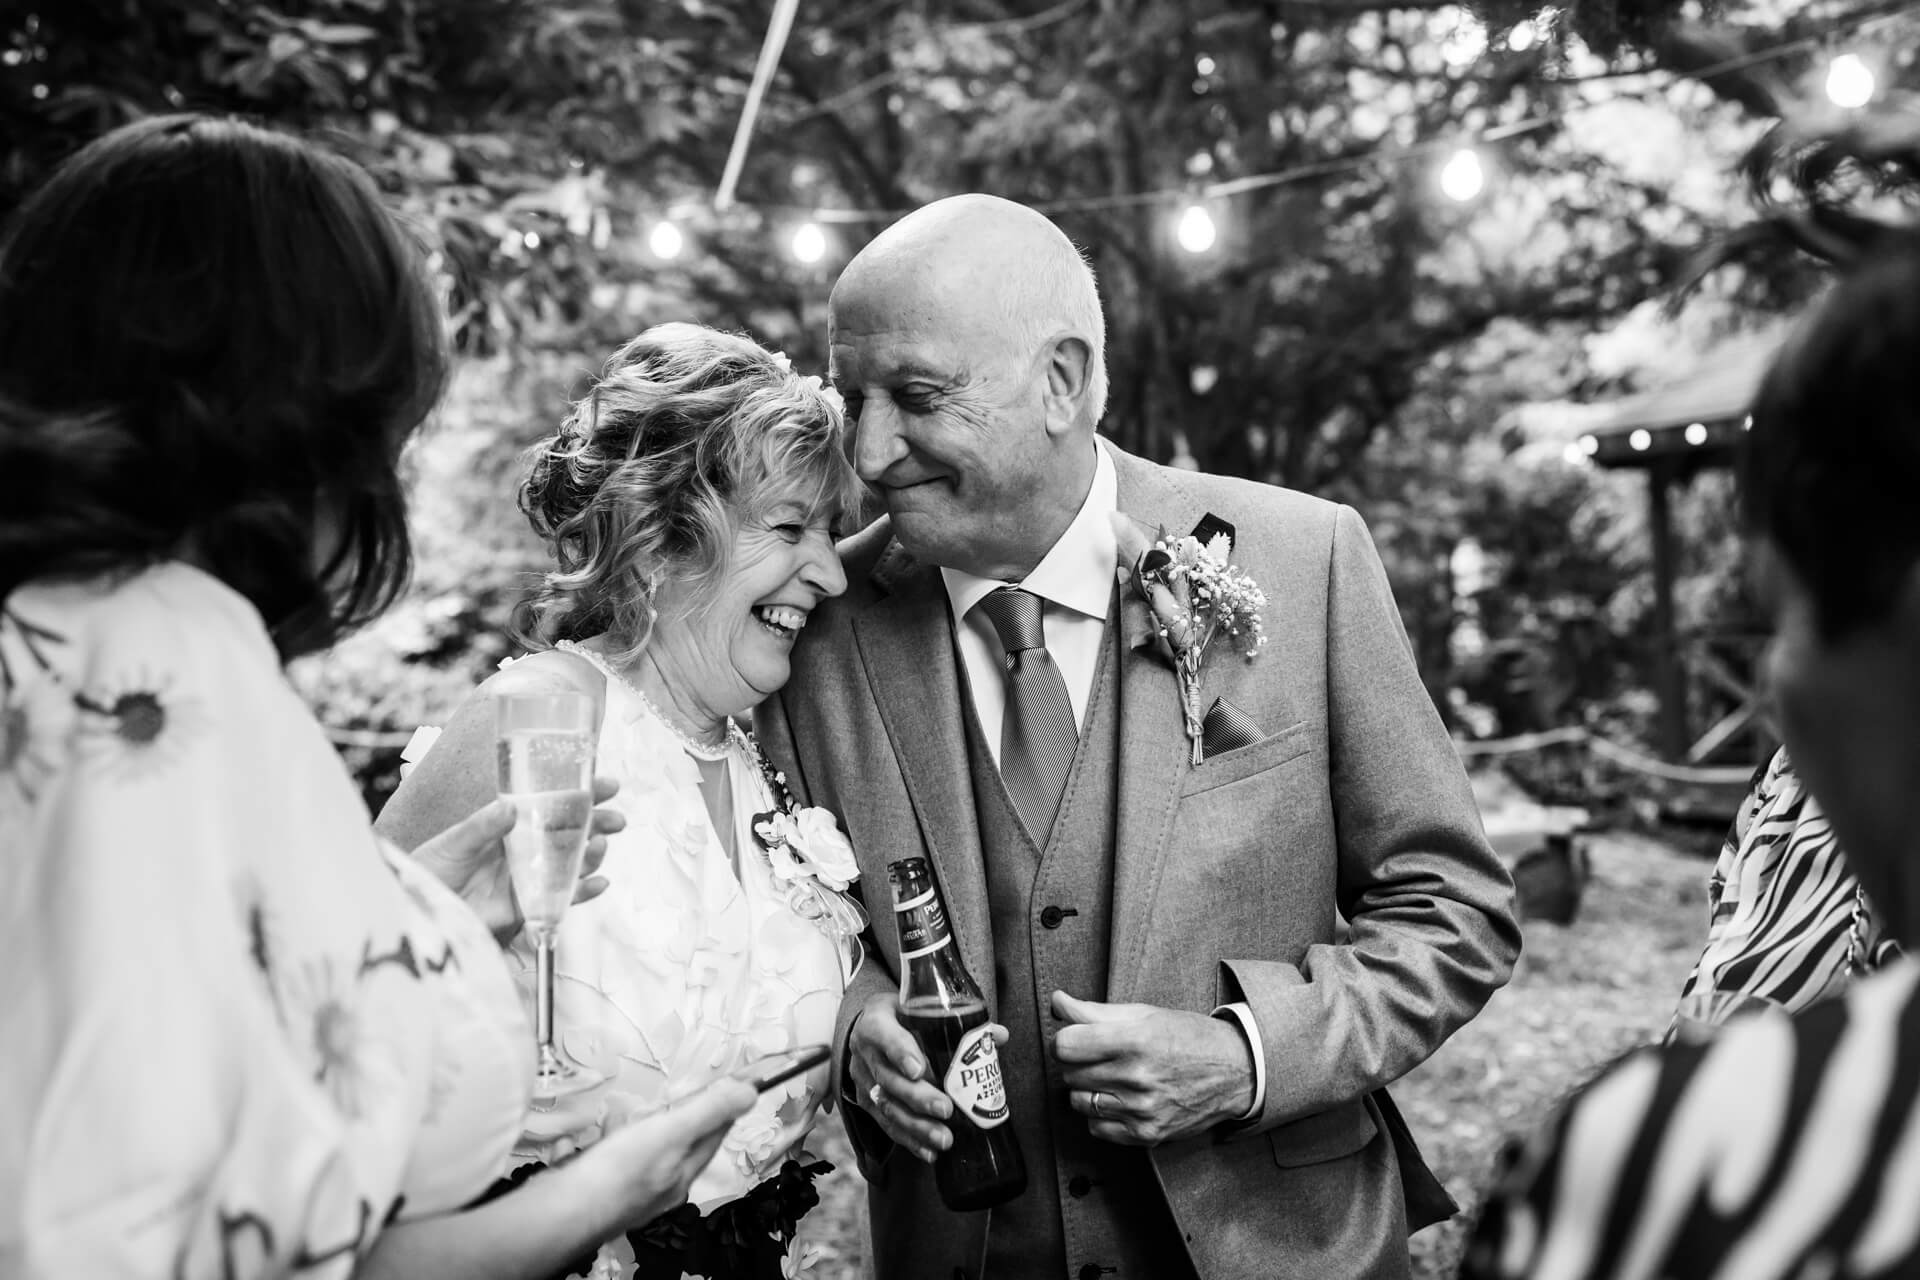 Joyful couple sharing a laugh at wedding reception.